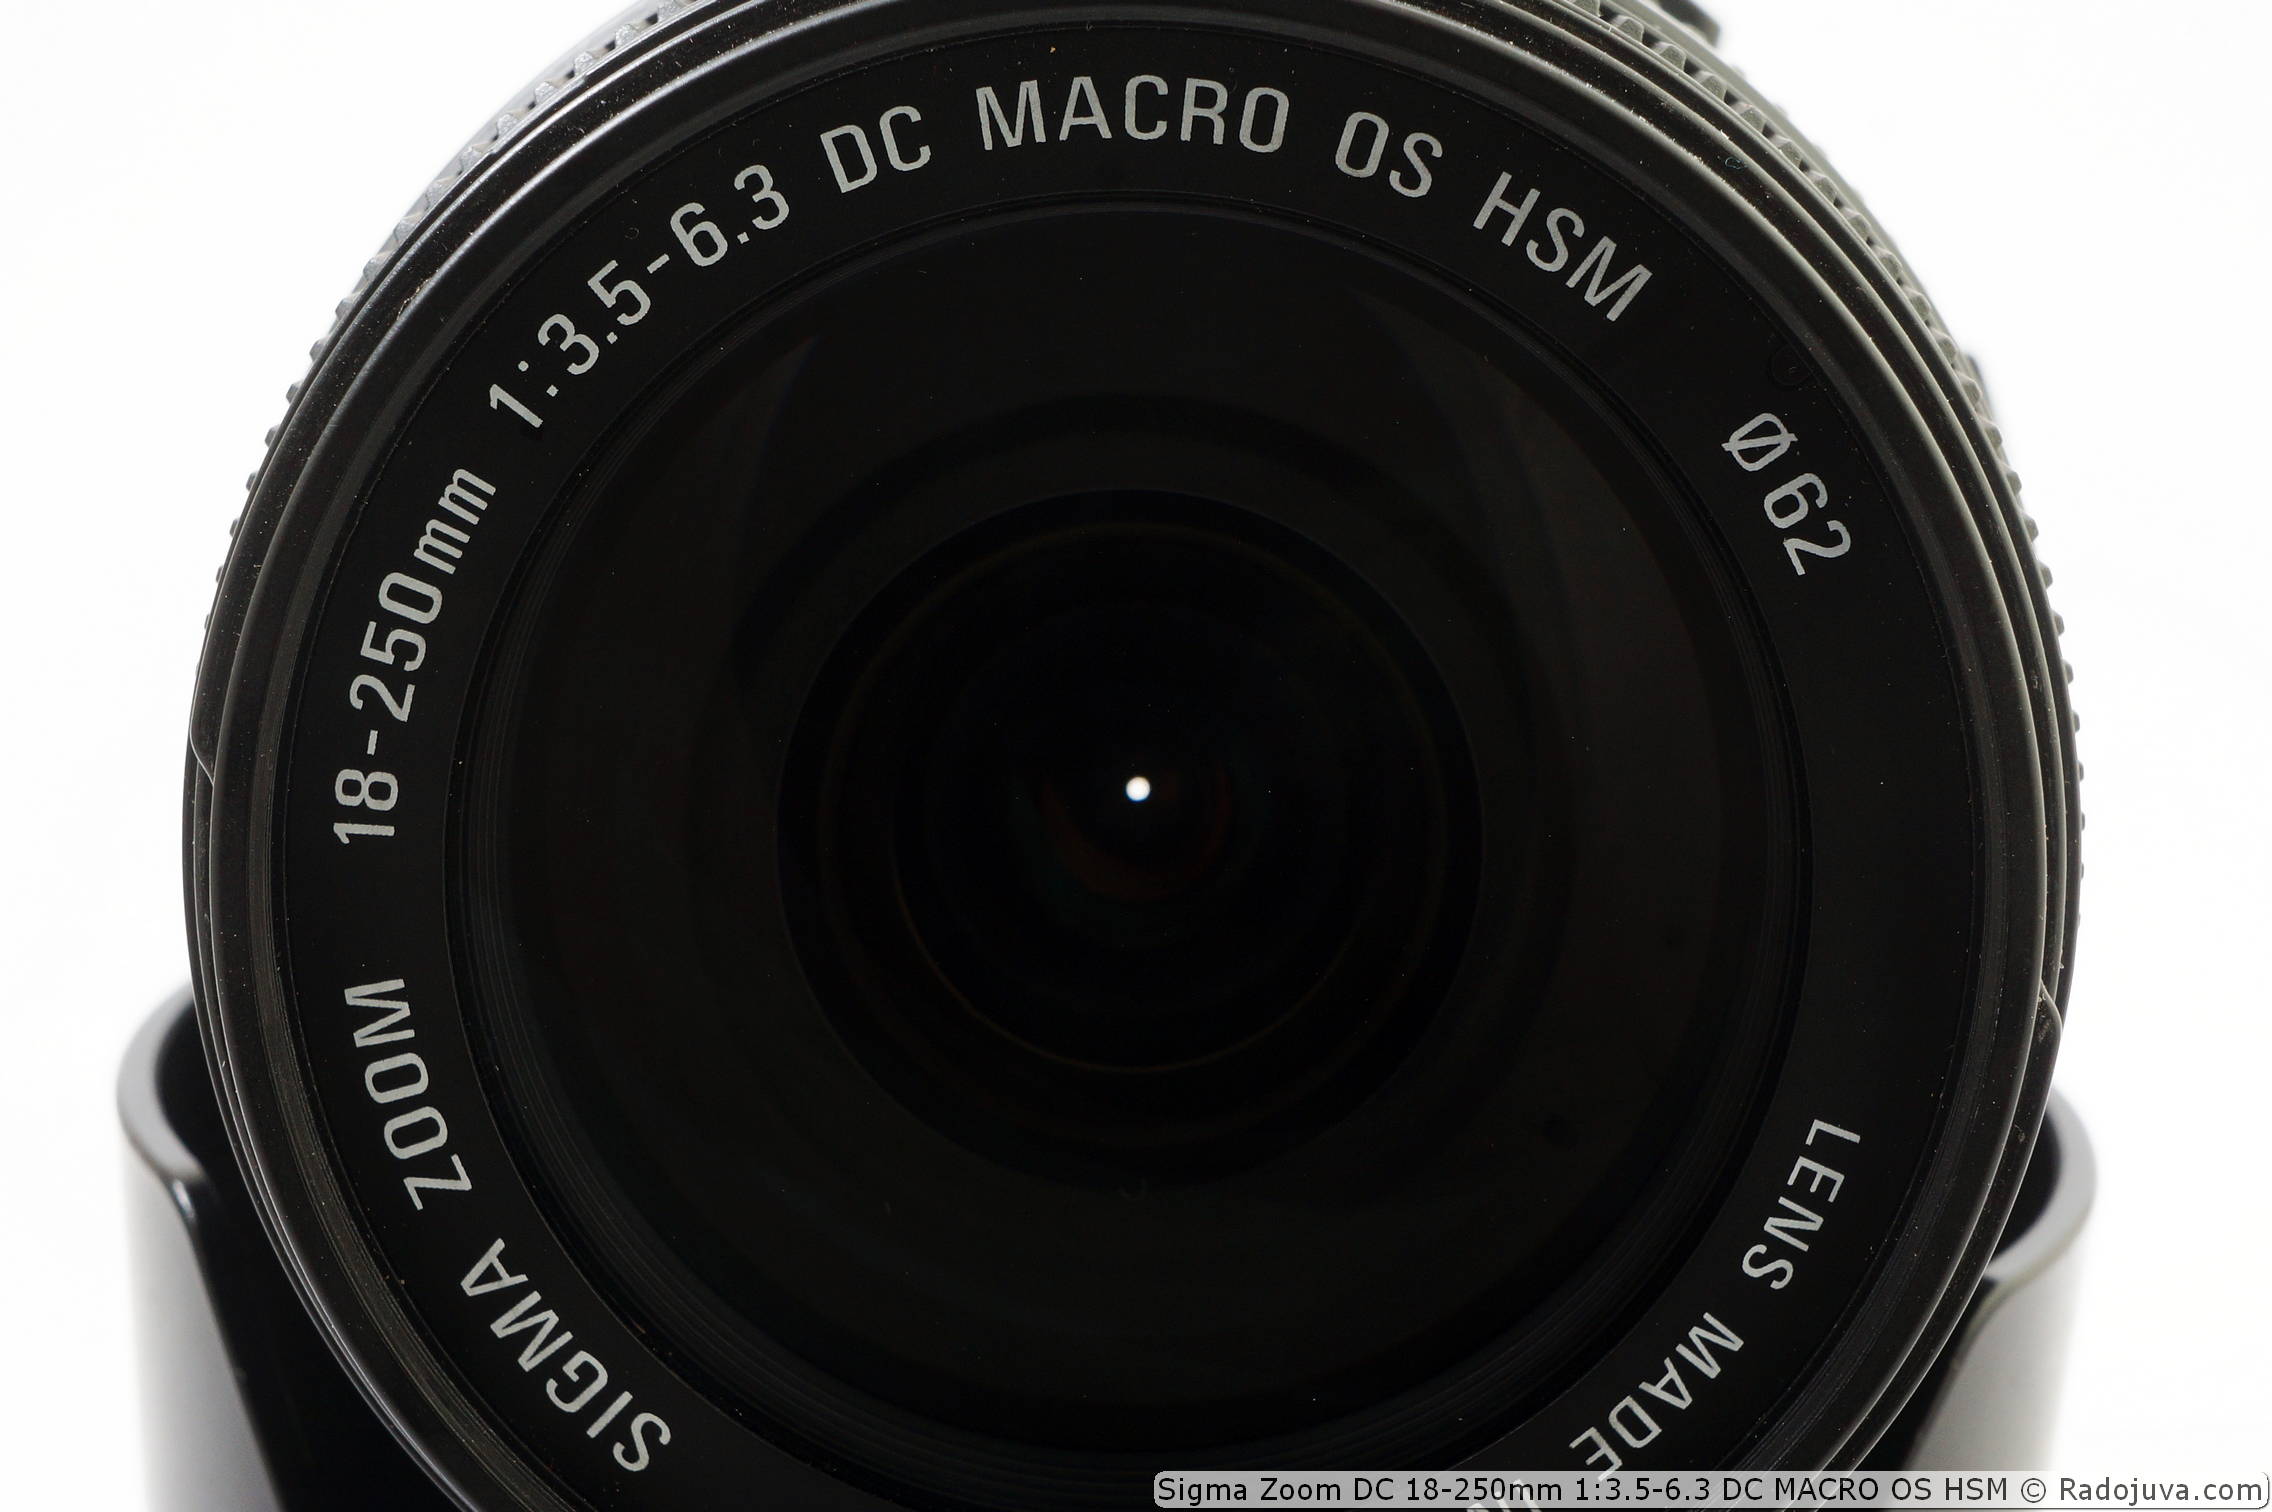 Sigma Zoom DC 18-250 mm 1:3.5-6.3 DC MACRO OS HSM